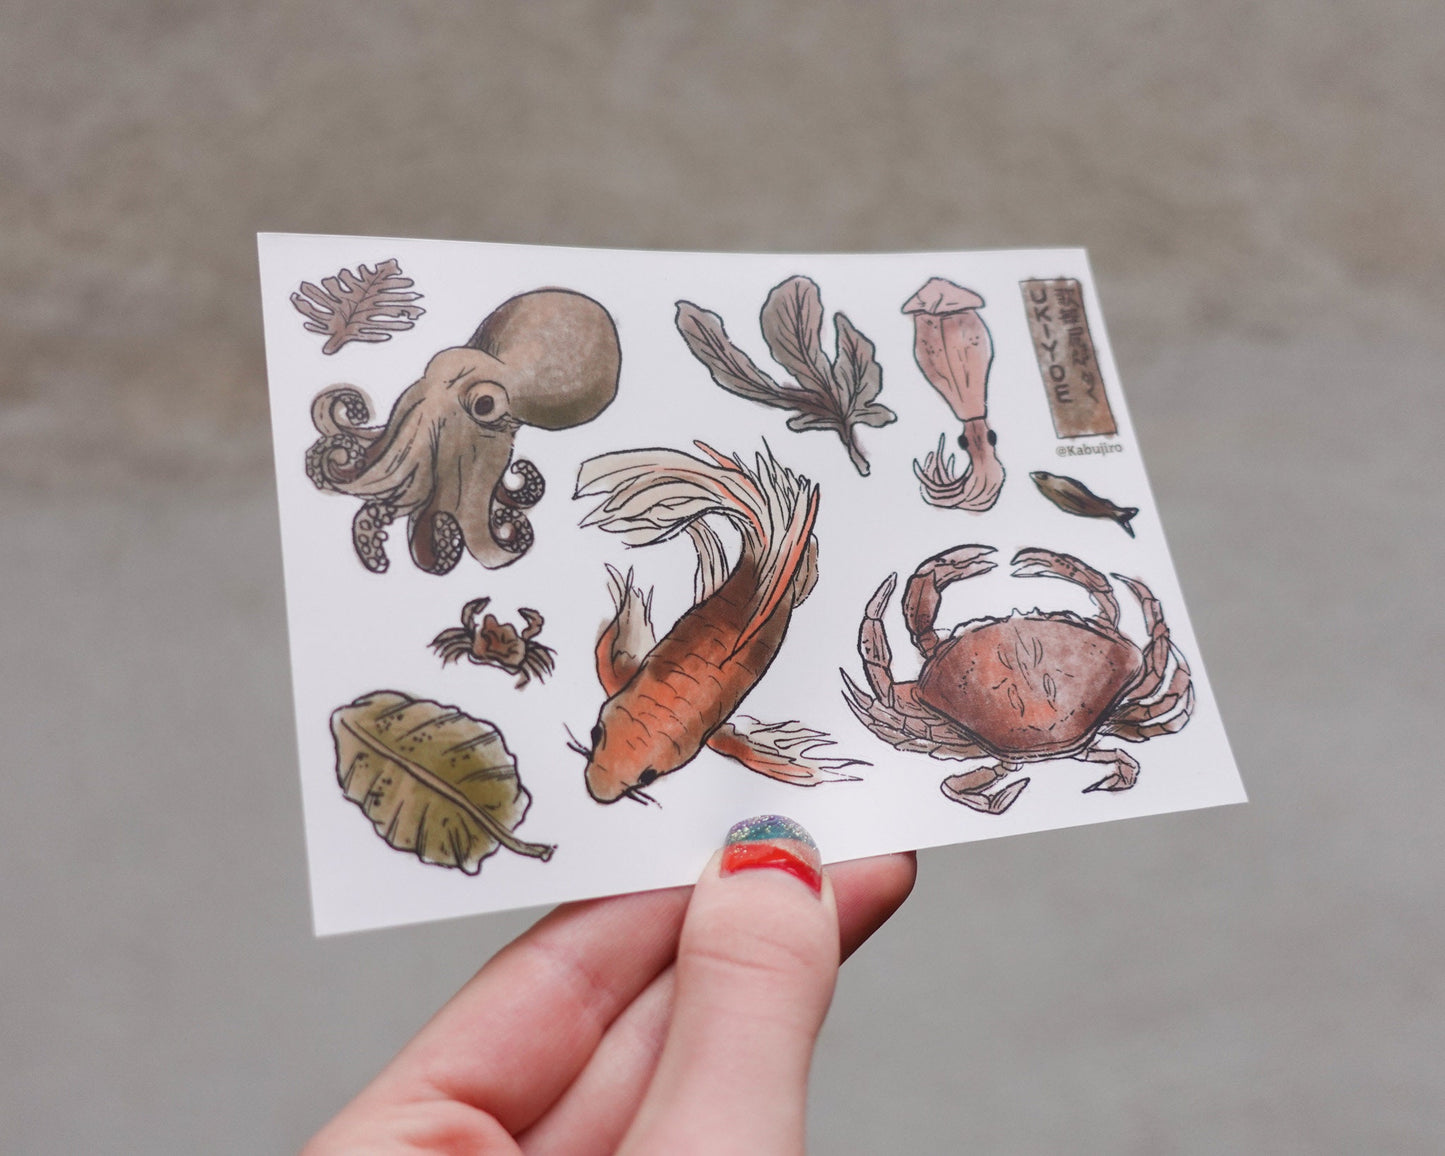 Sea Creatures – Stickersheet with 9 Japanese Ukiyo-e inspired Stickers